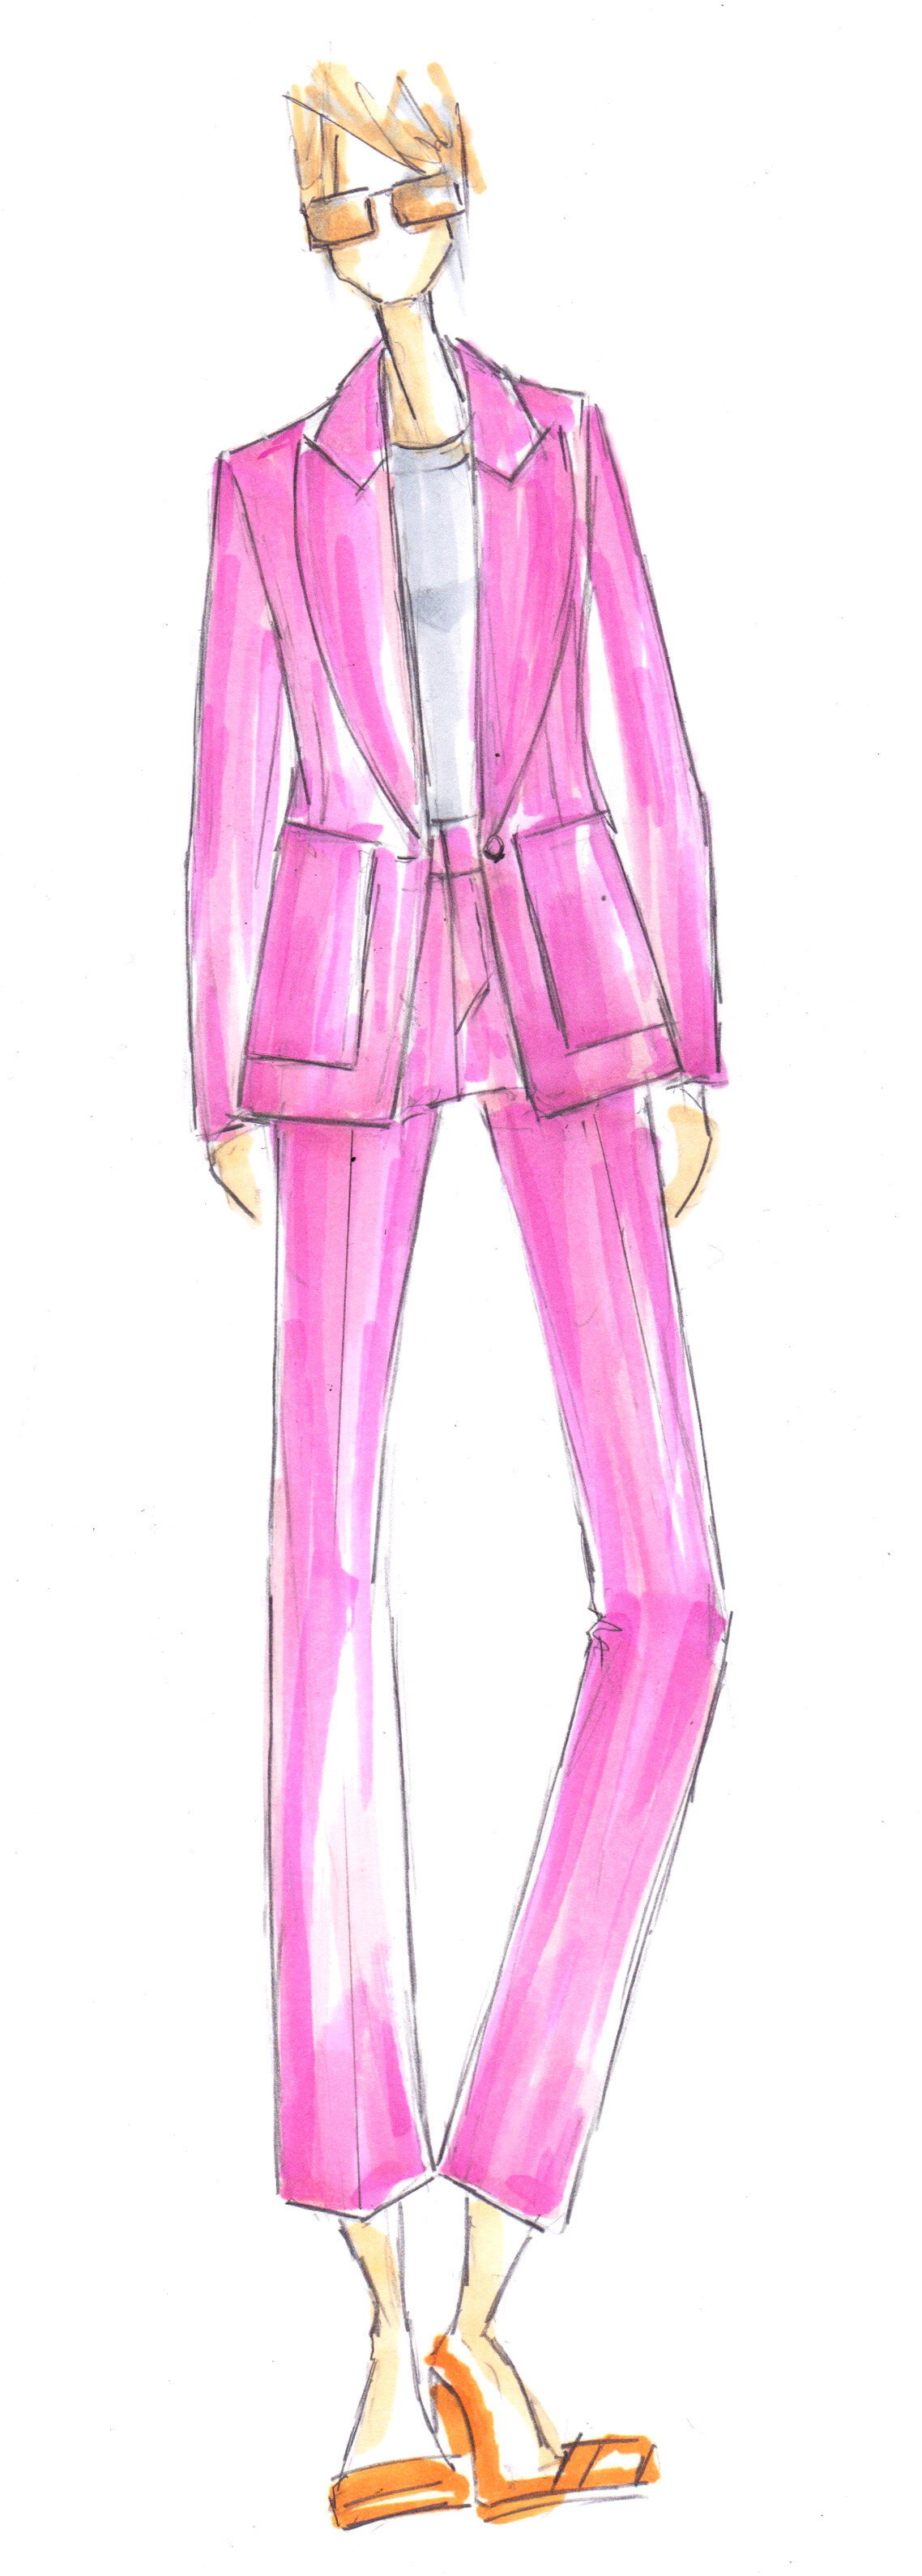 pinksuit sketch.jpeg